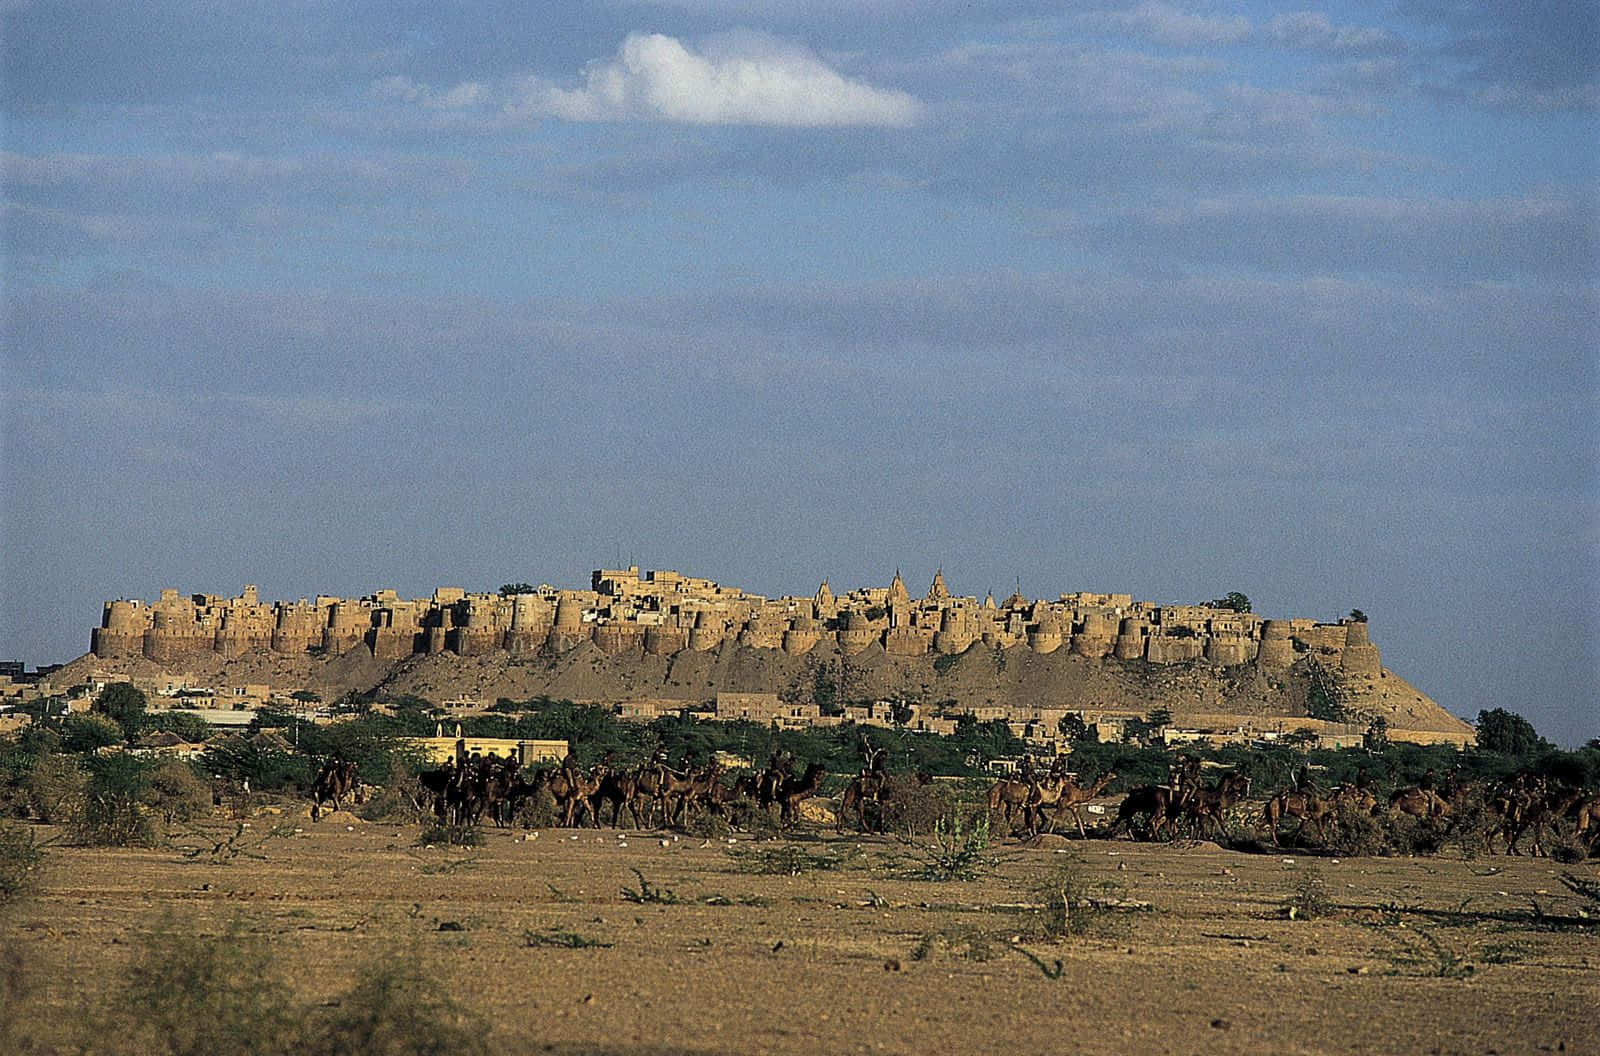 Caption: Majestic Rajasthan Fort under a Surreal Skyline